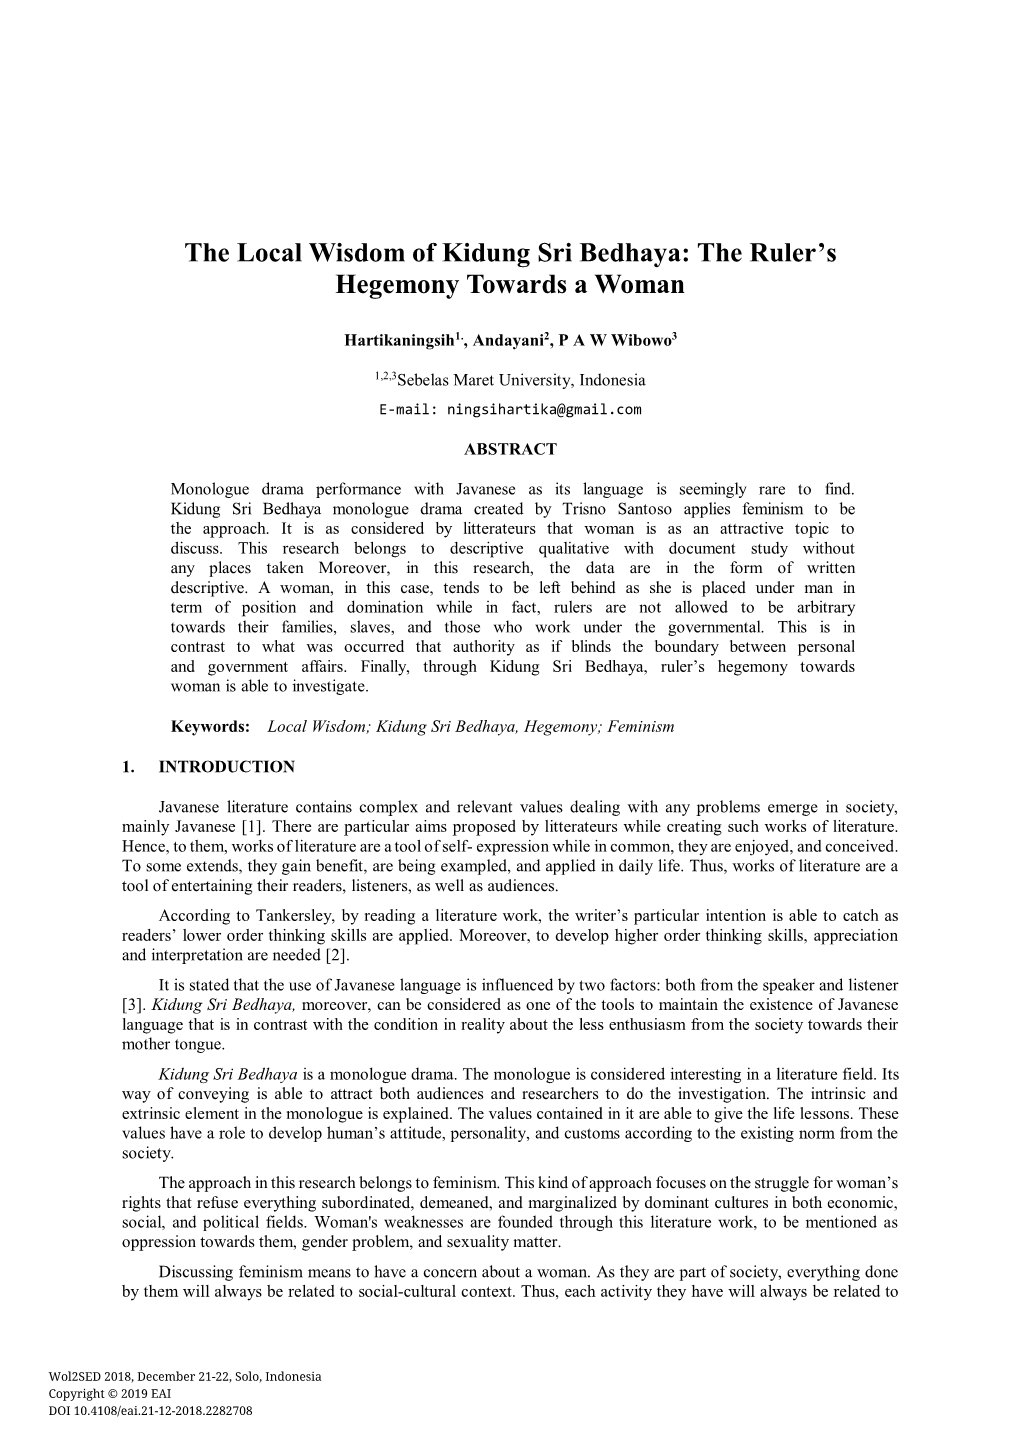 The Local Wisdom of Kidung Sri Bedhaya: the Ruler's Hegemony